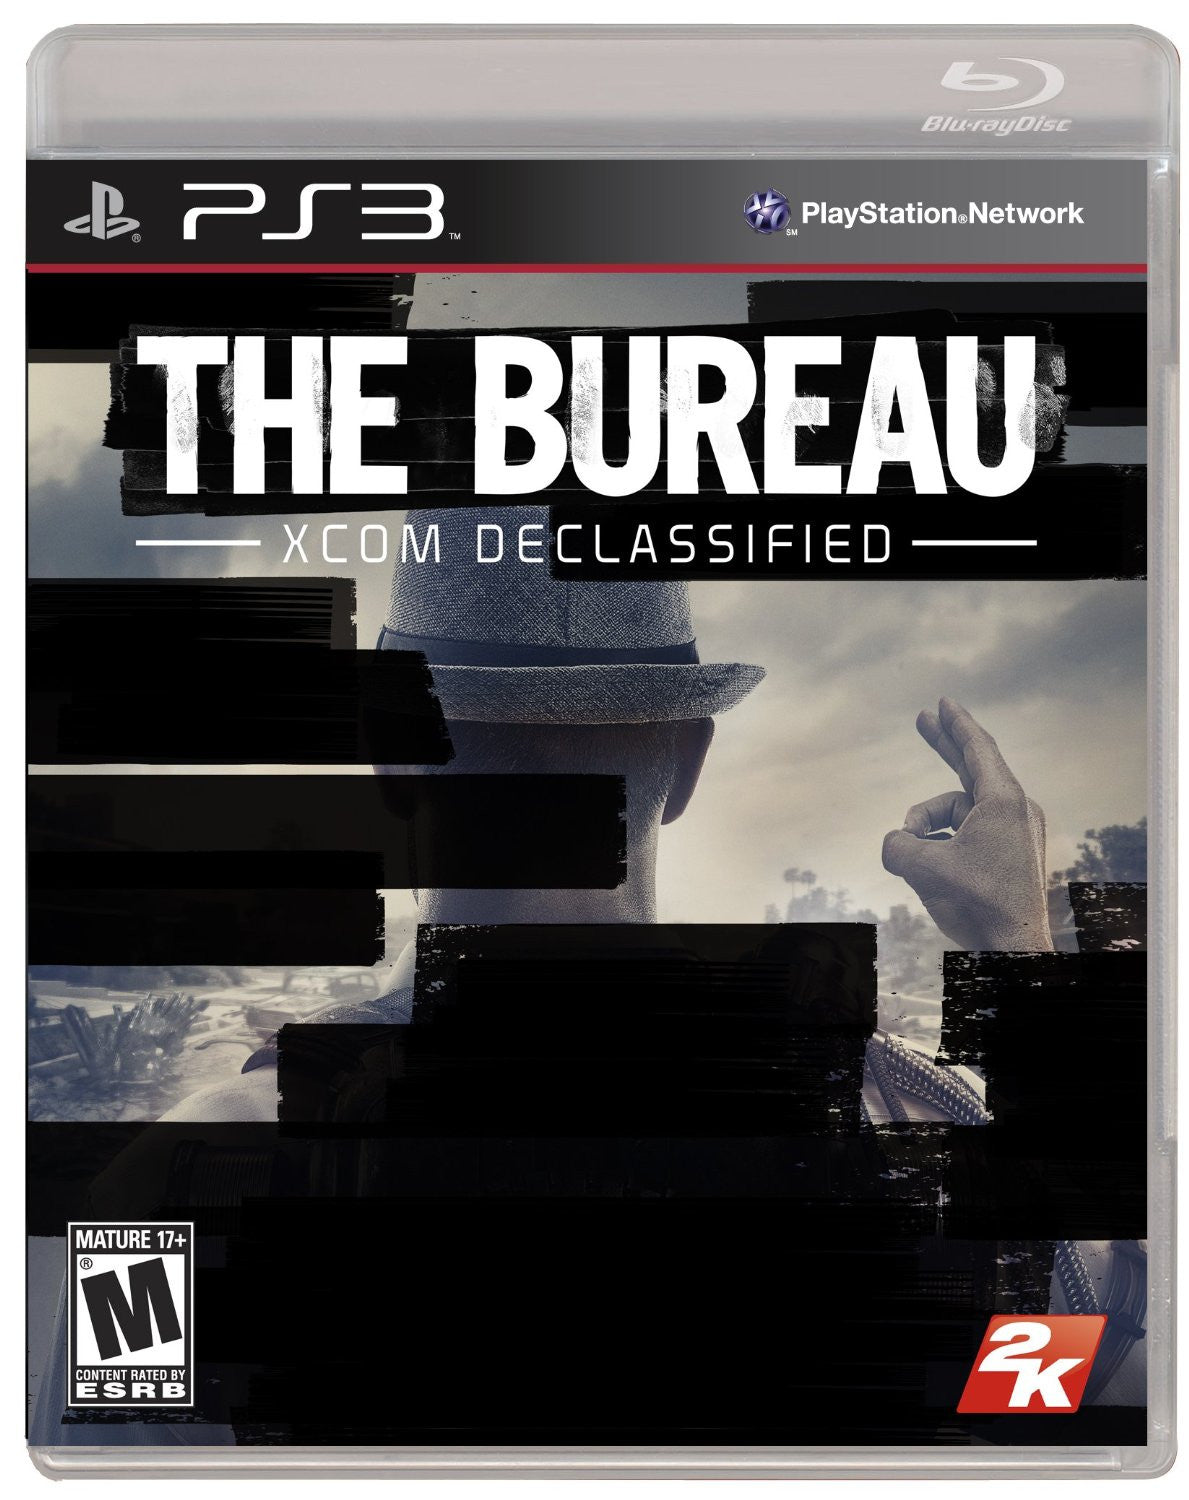 The Bureau XCOM Declassified PS3 Video Game